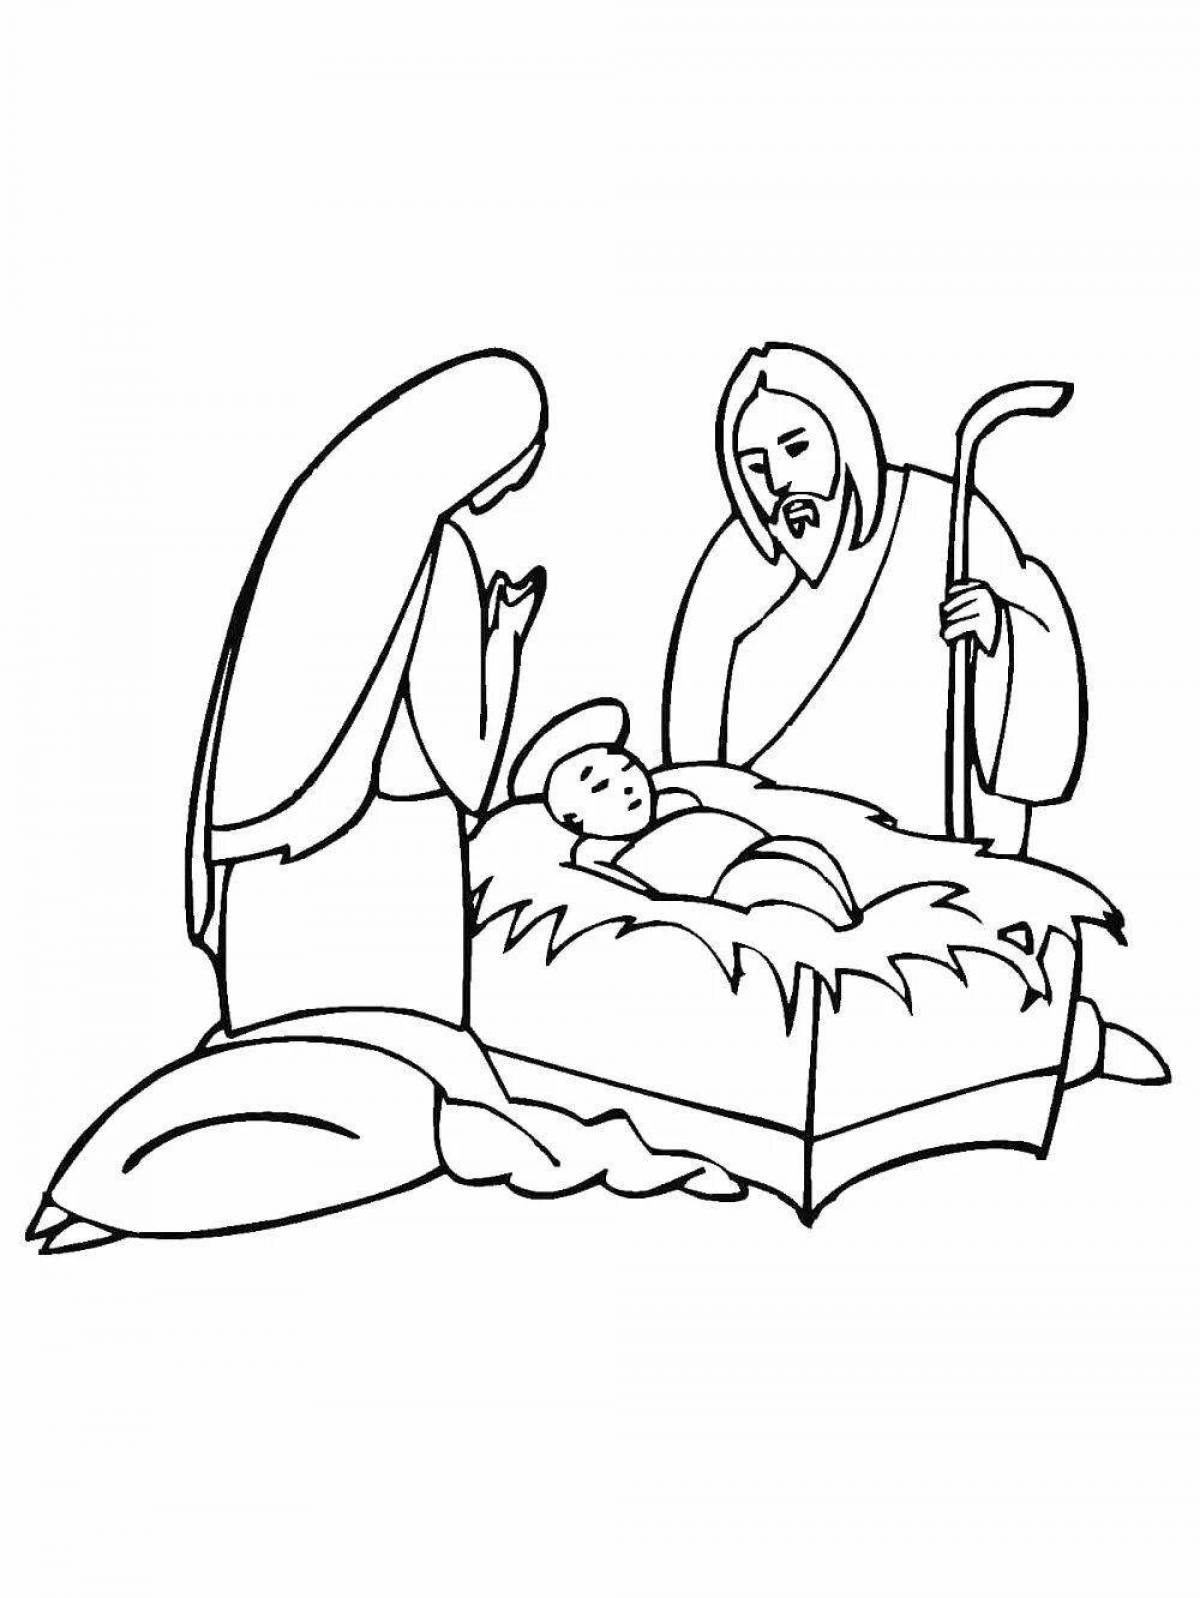 Coloring page brilliant birth of jesus christ